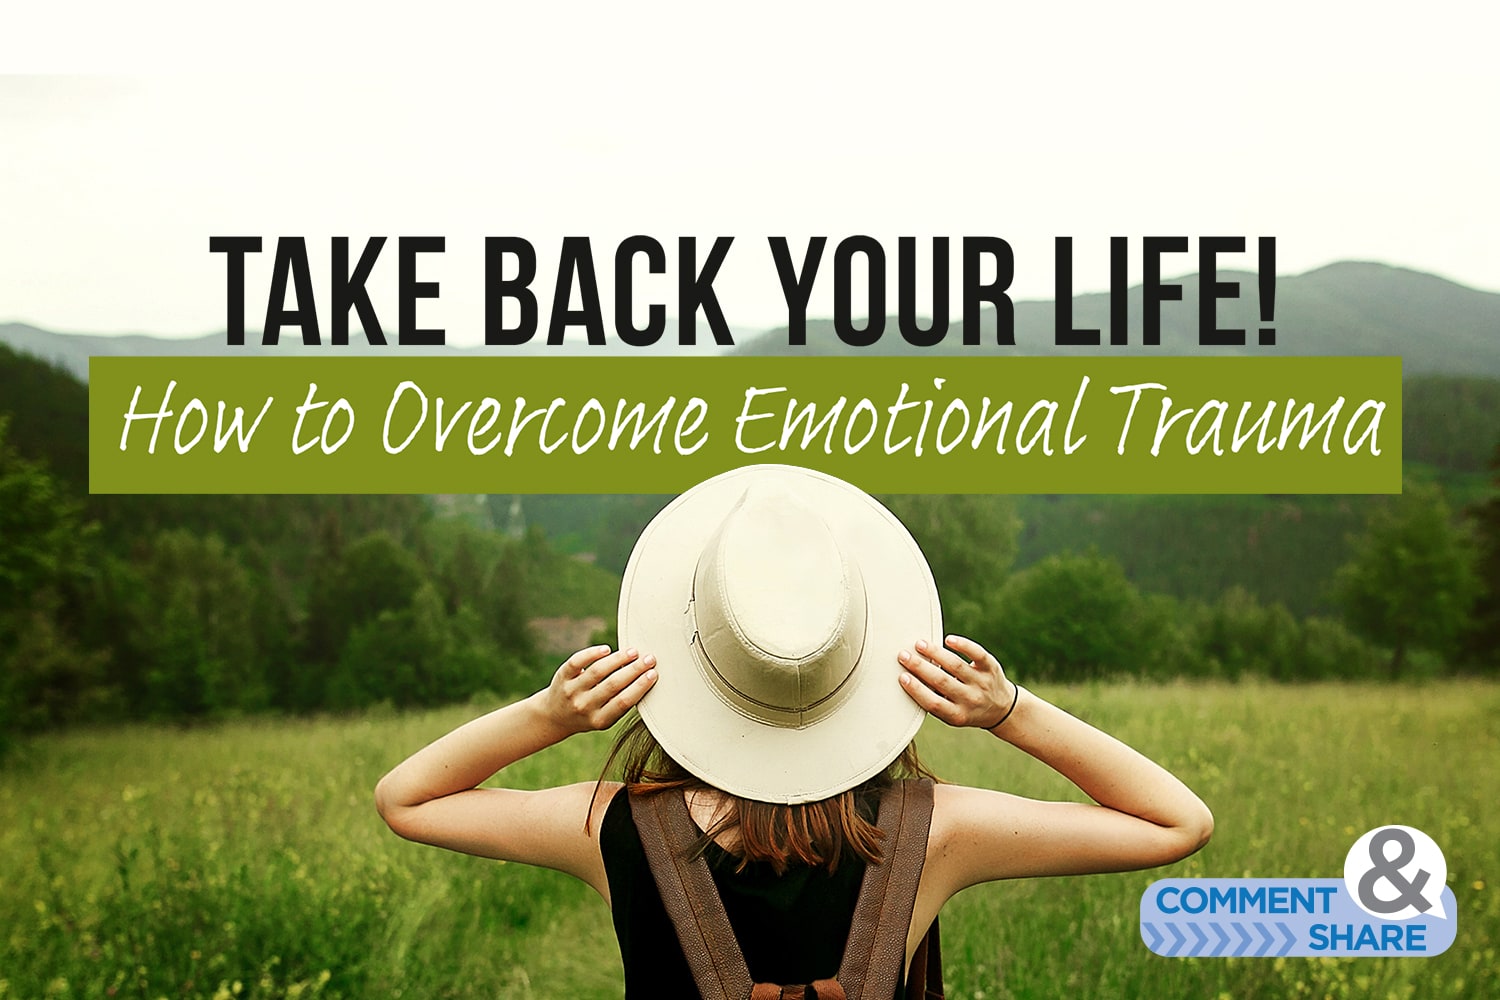 How to Overcome Emotional Trauma